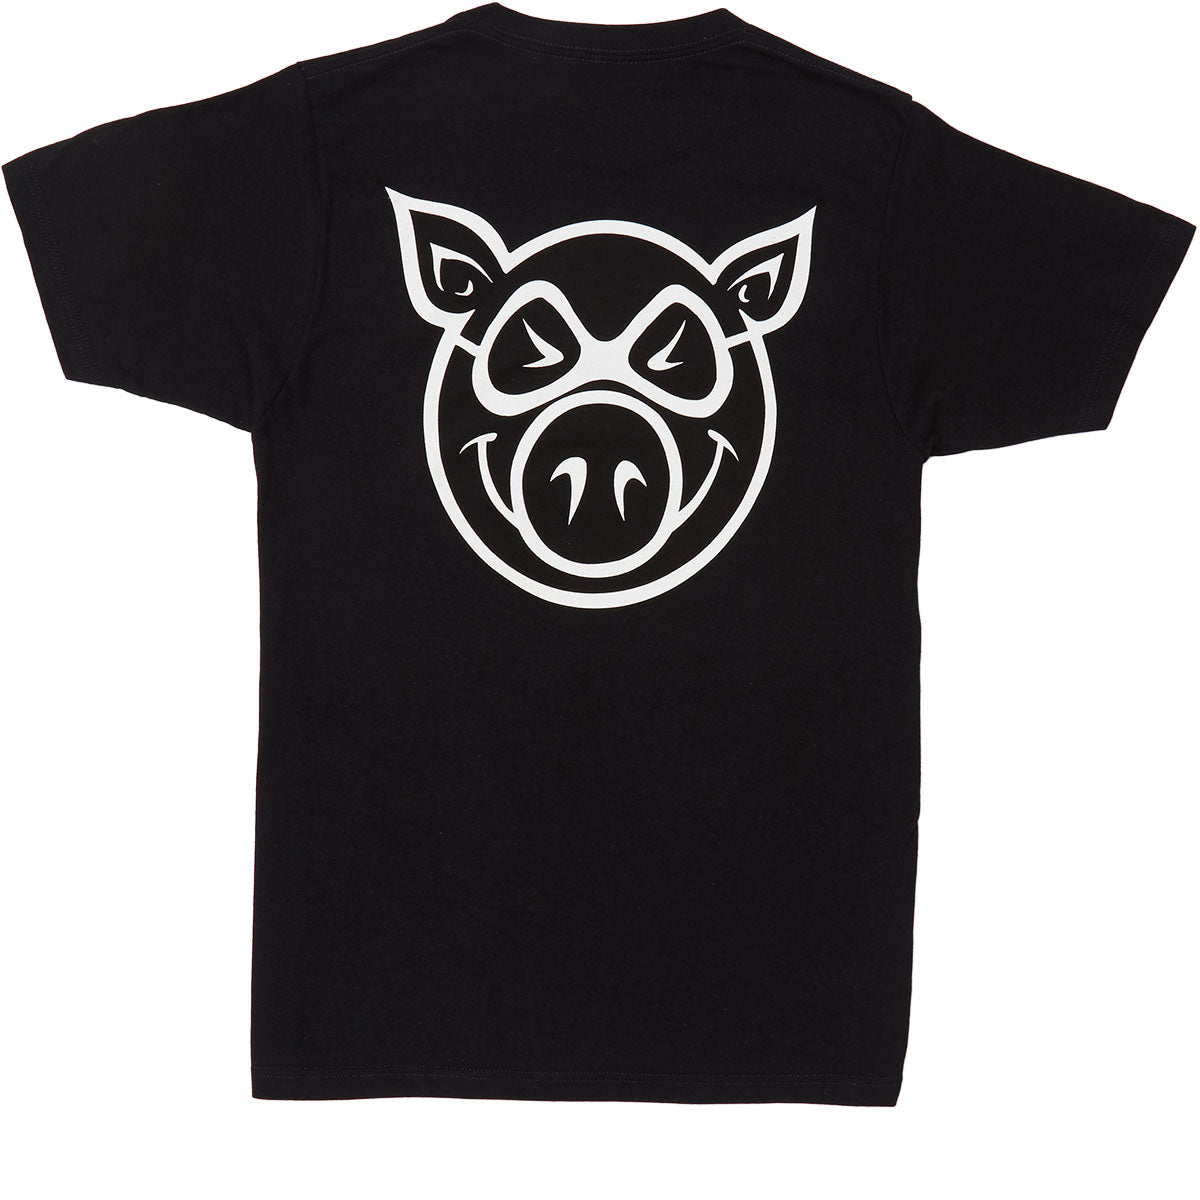 Pig F and B Head T-Shirt - Black image 1